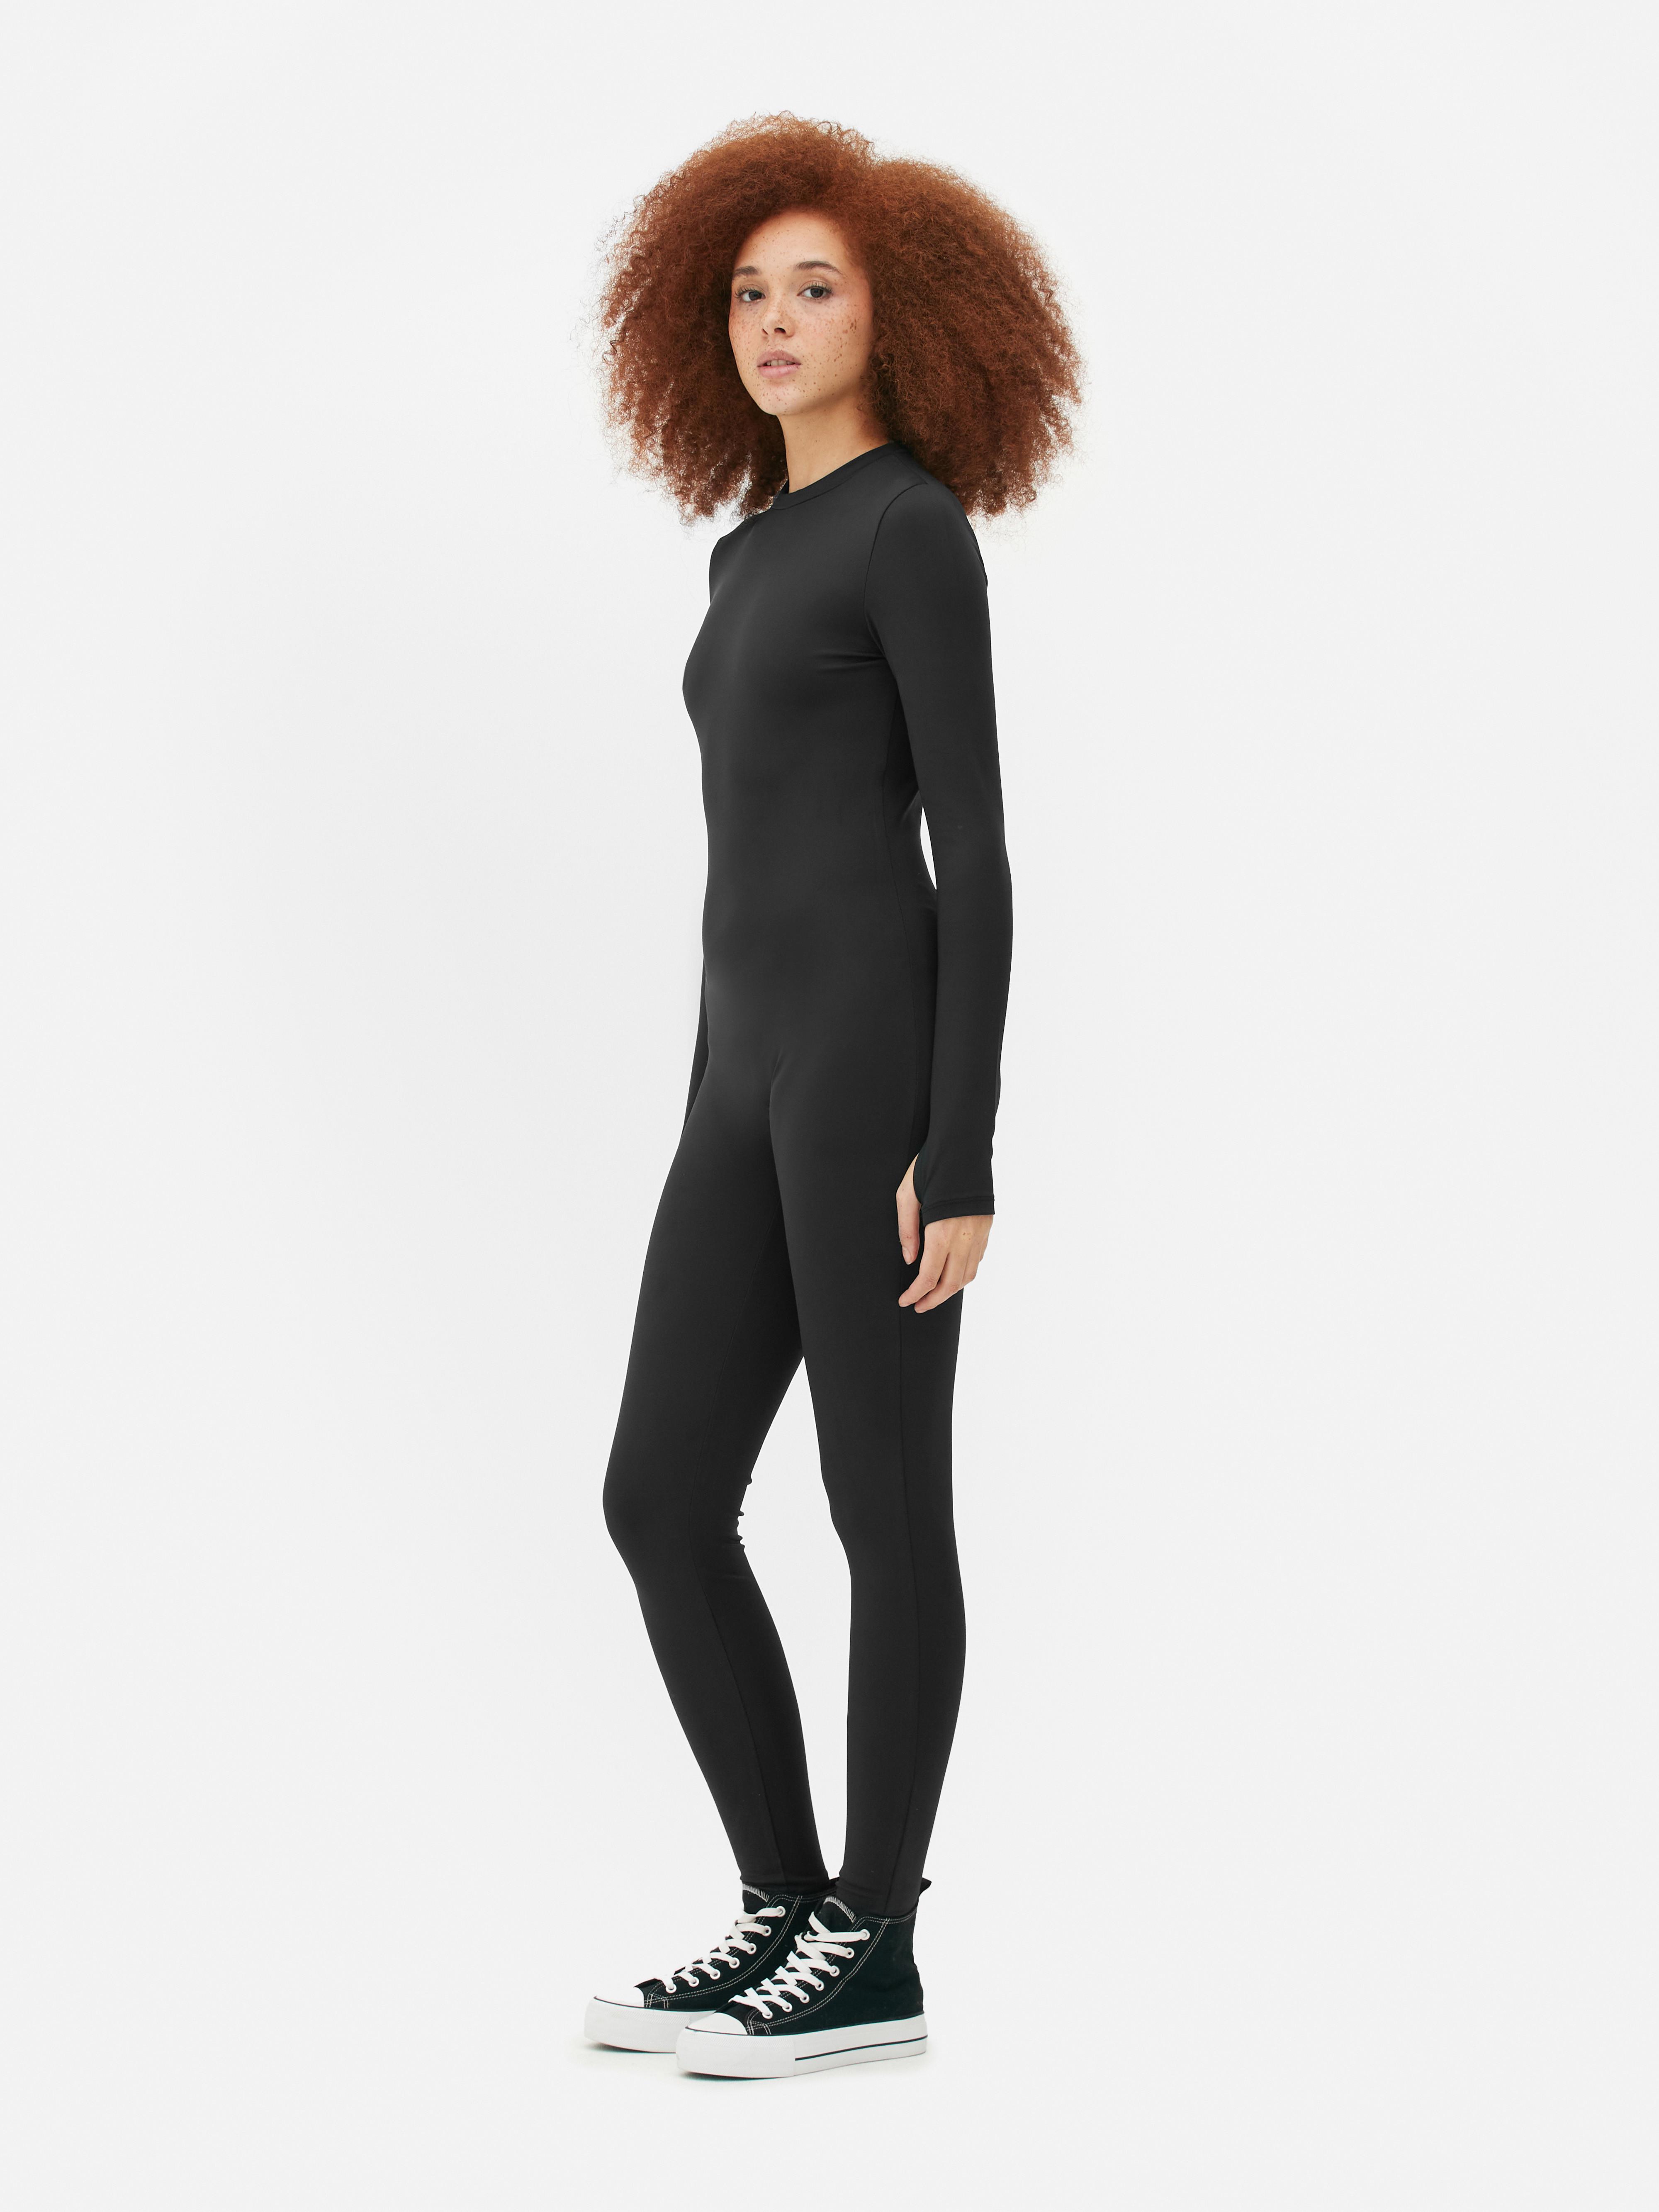 Primark Ruffle Sleeve Black body suit  Black bodysuit, Clothes design,  Outfit inspo